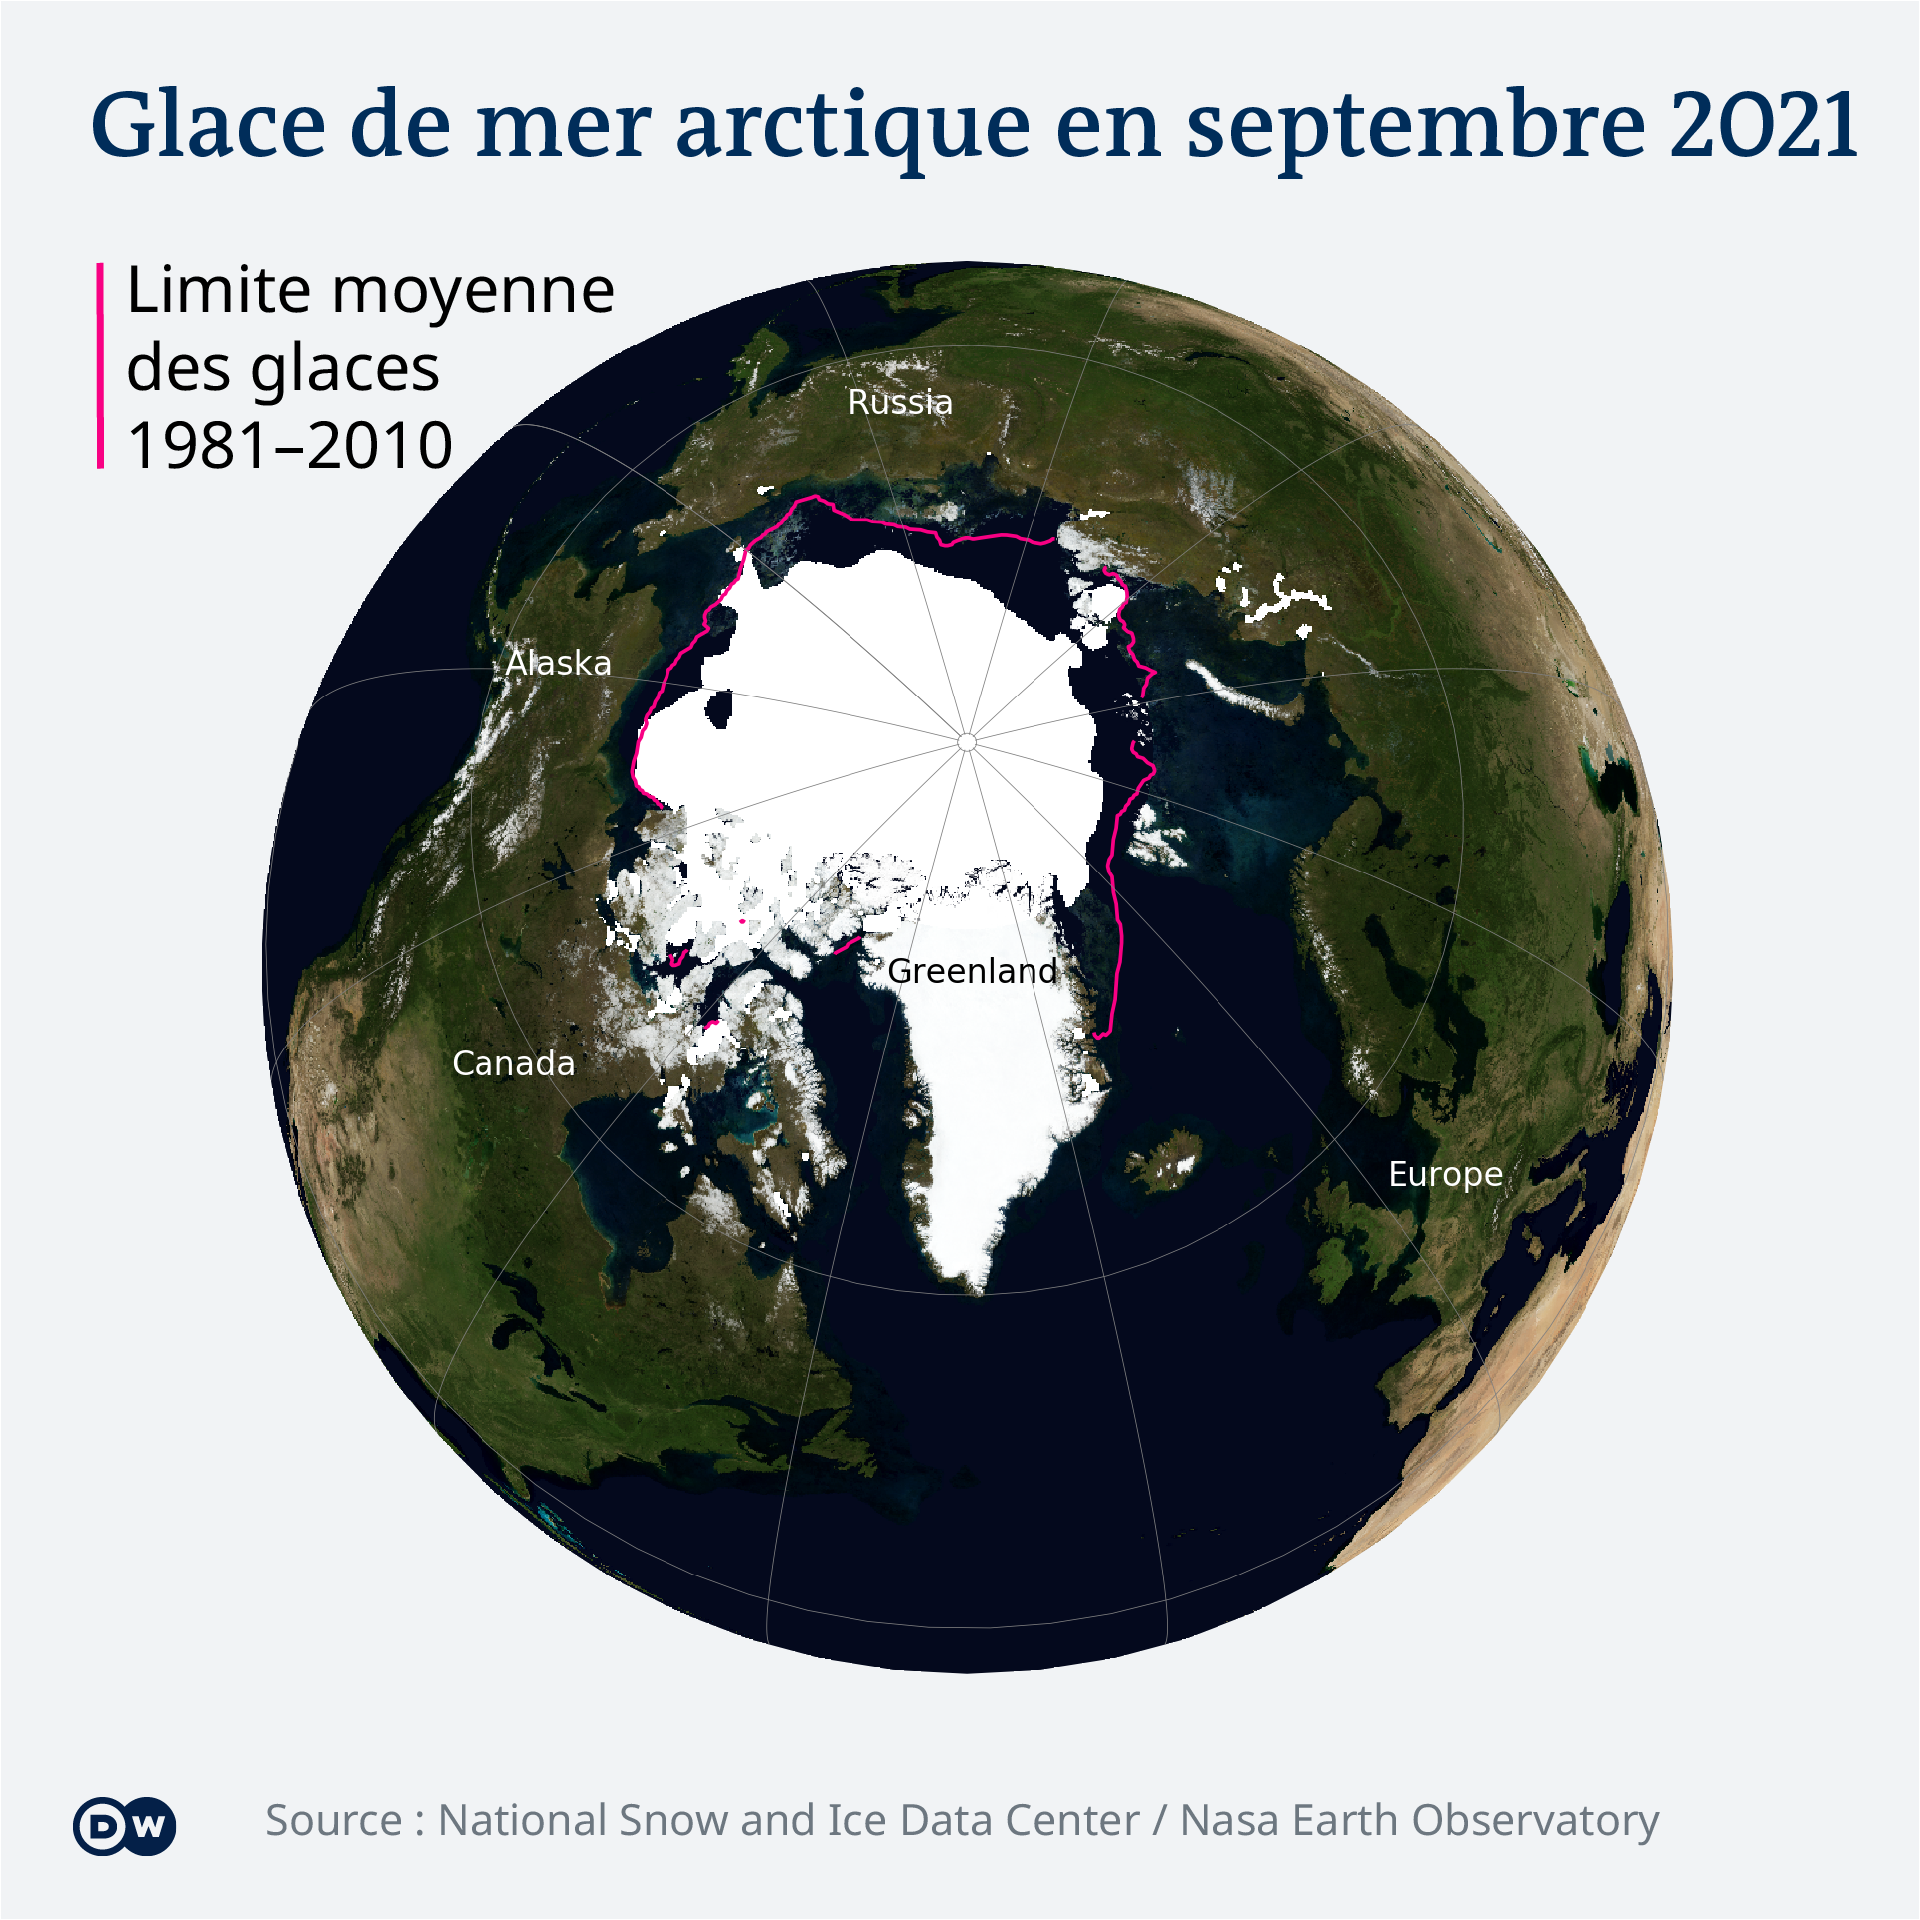 Glace de mer arctique en septembre 2021